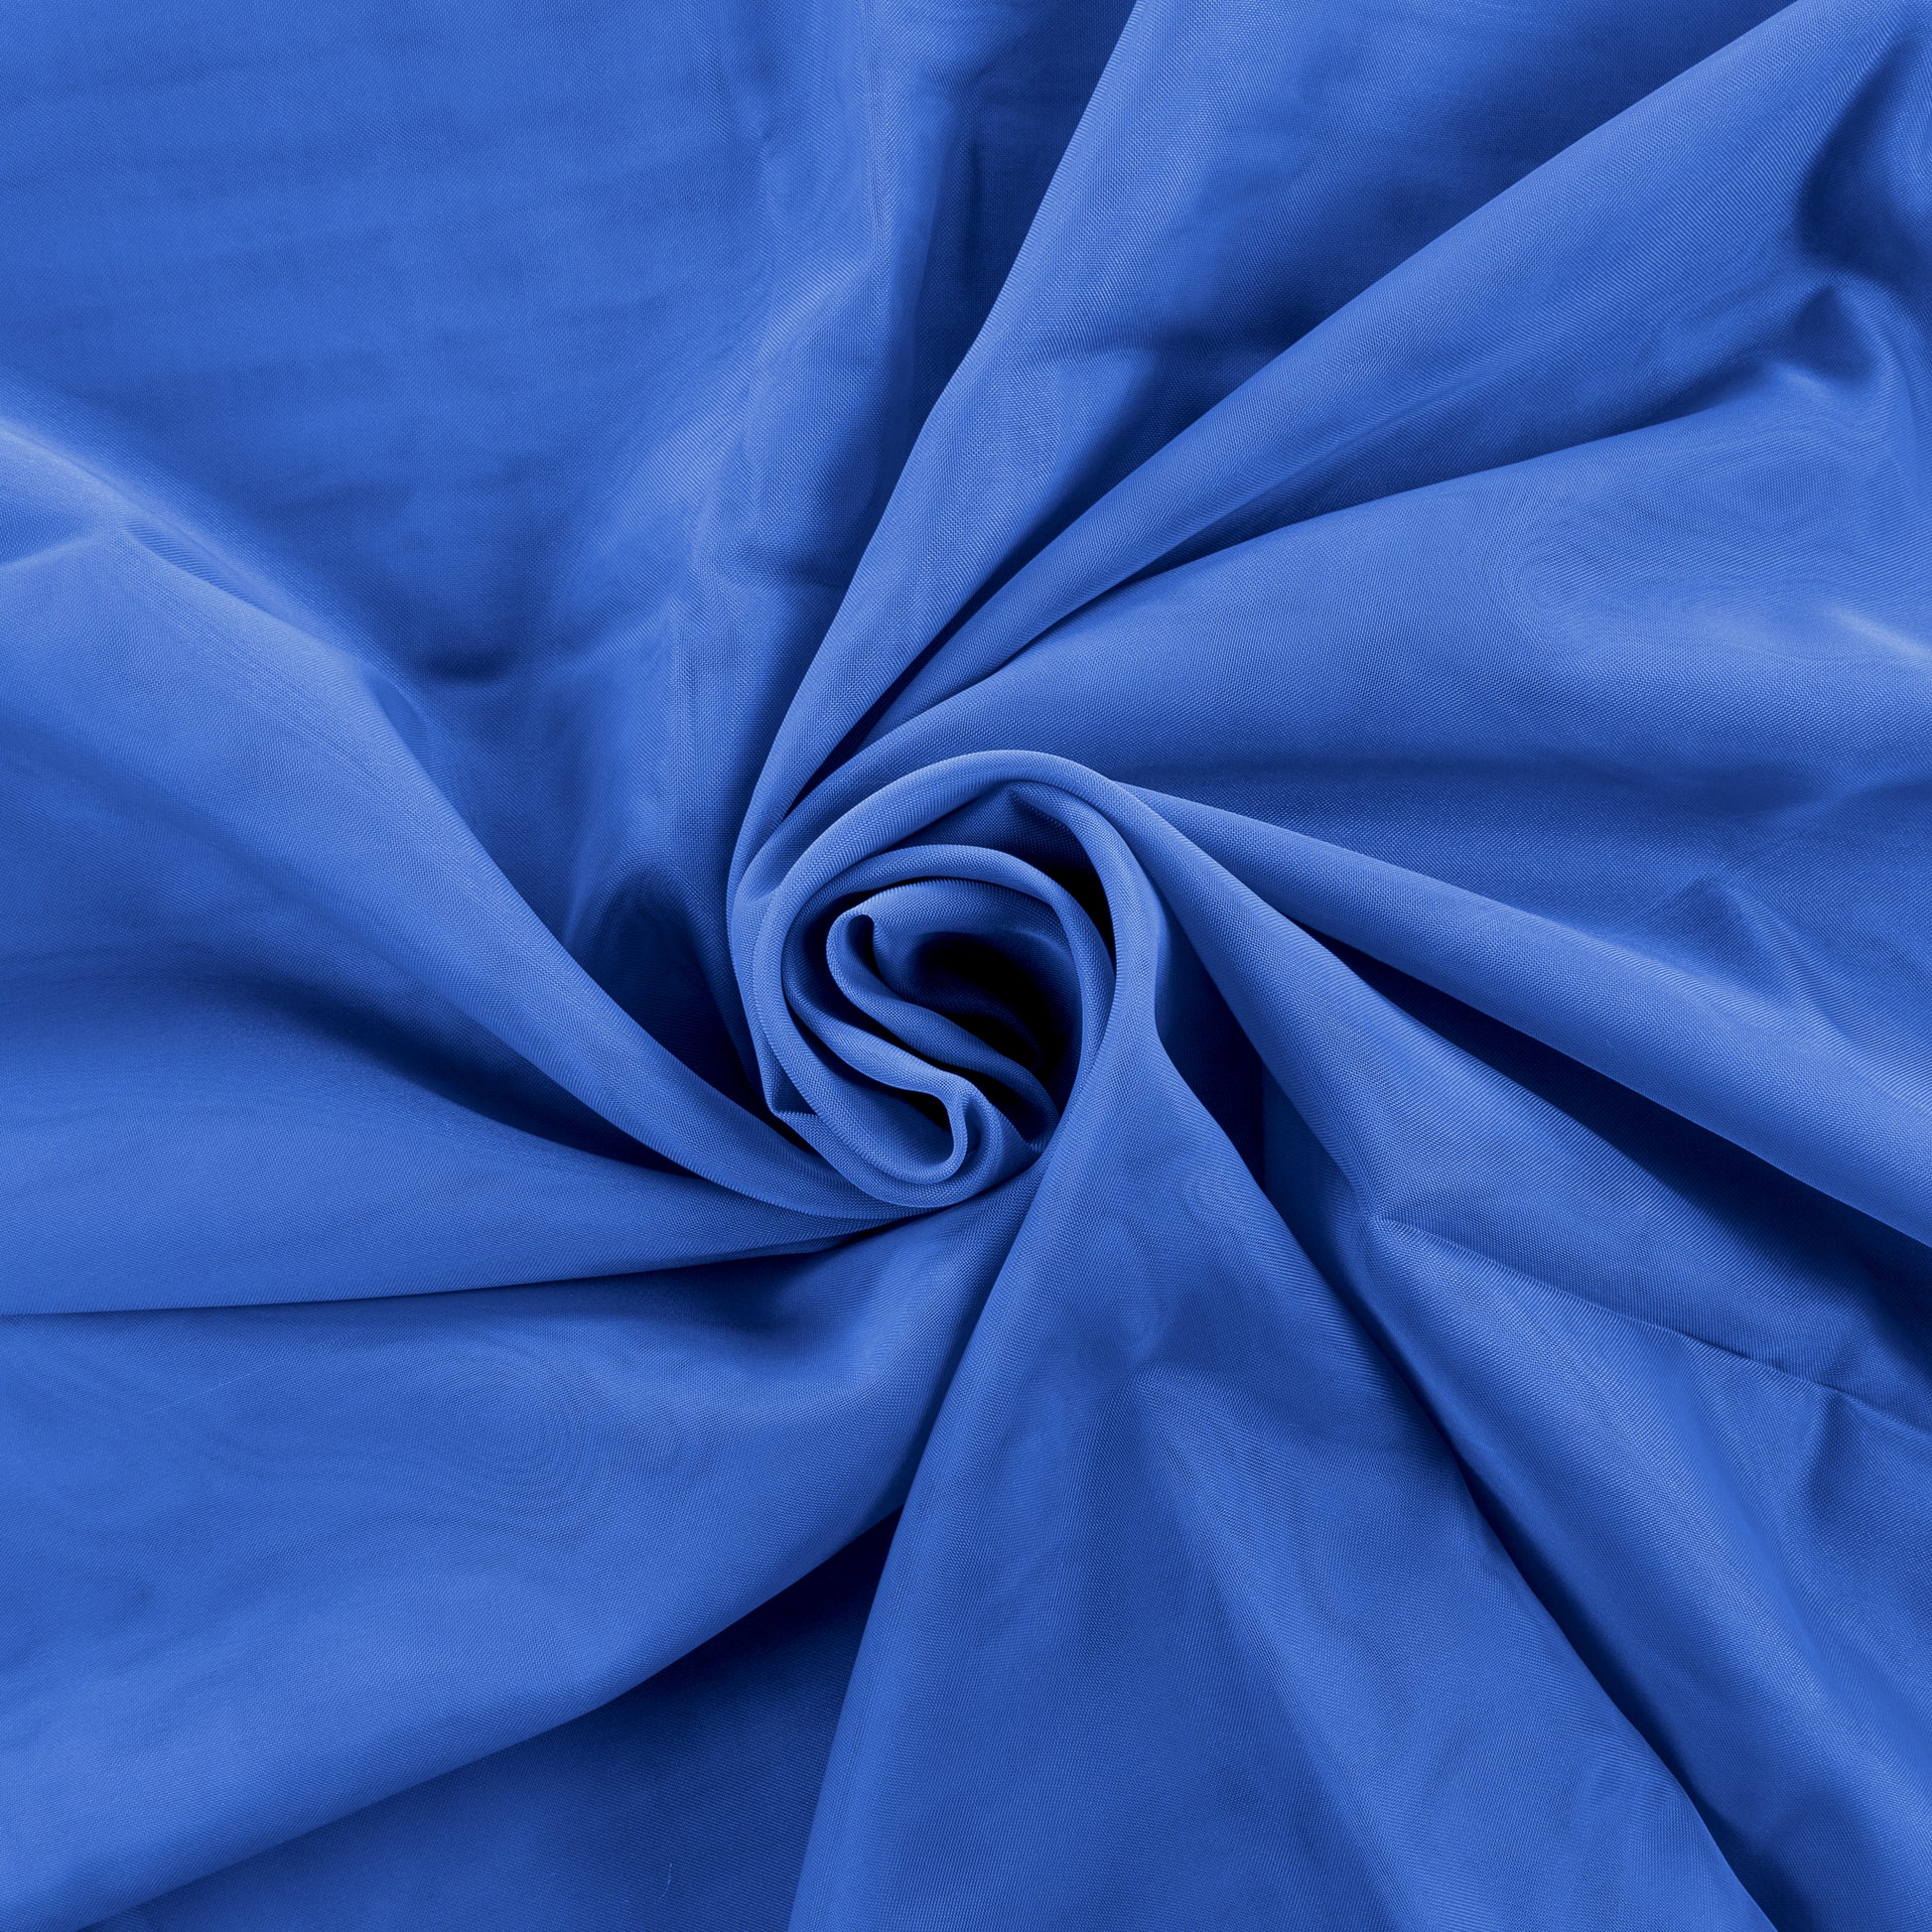 10 yards x 118" Flame Retardant (FR) Voile Sheer Fabric Roll/Bolt - Royal Blue - CV Linens